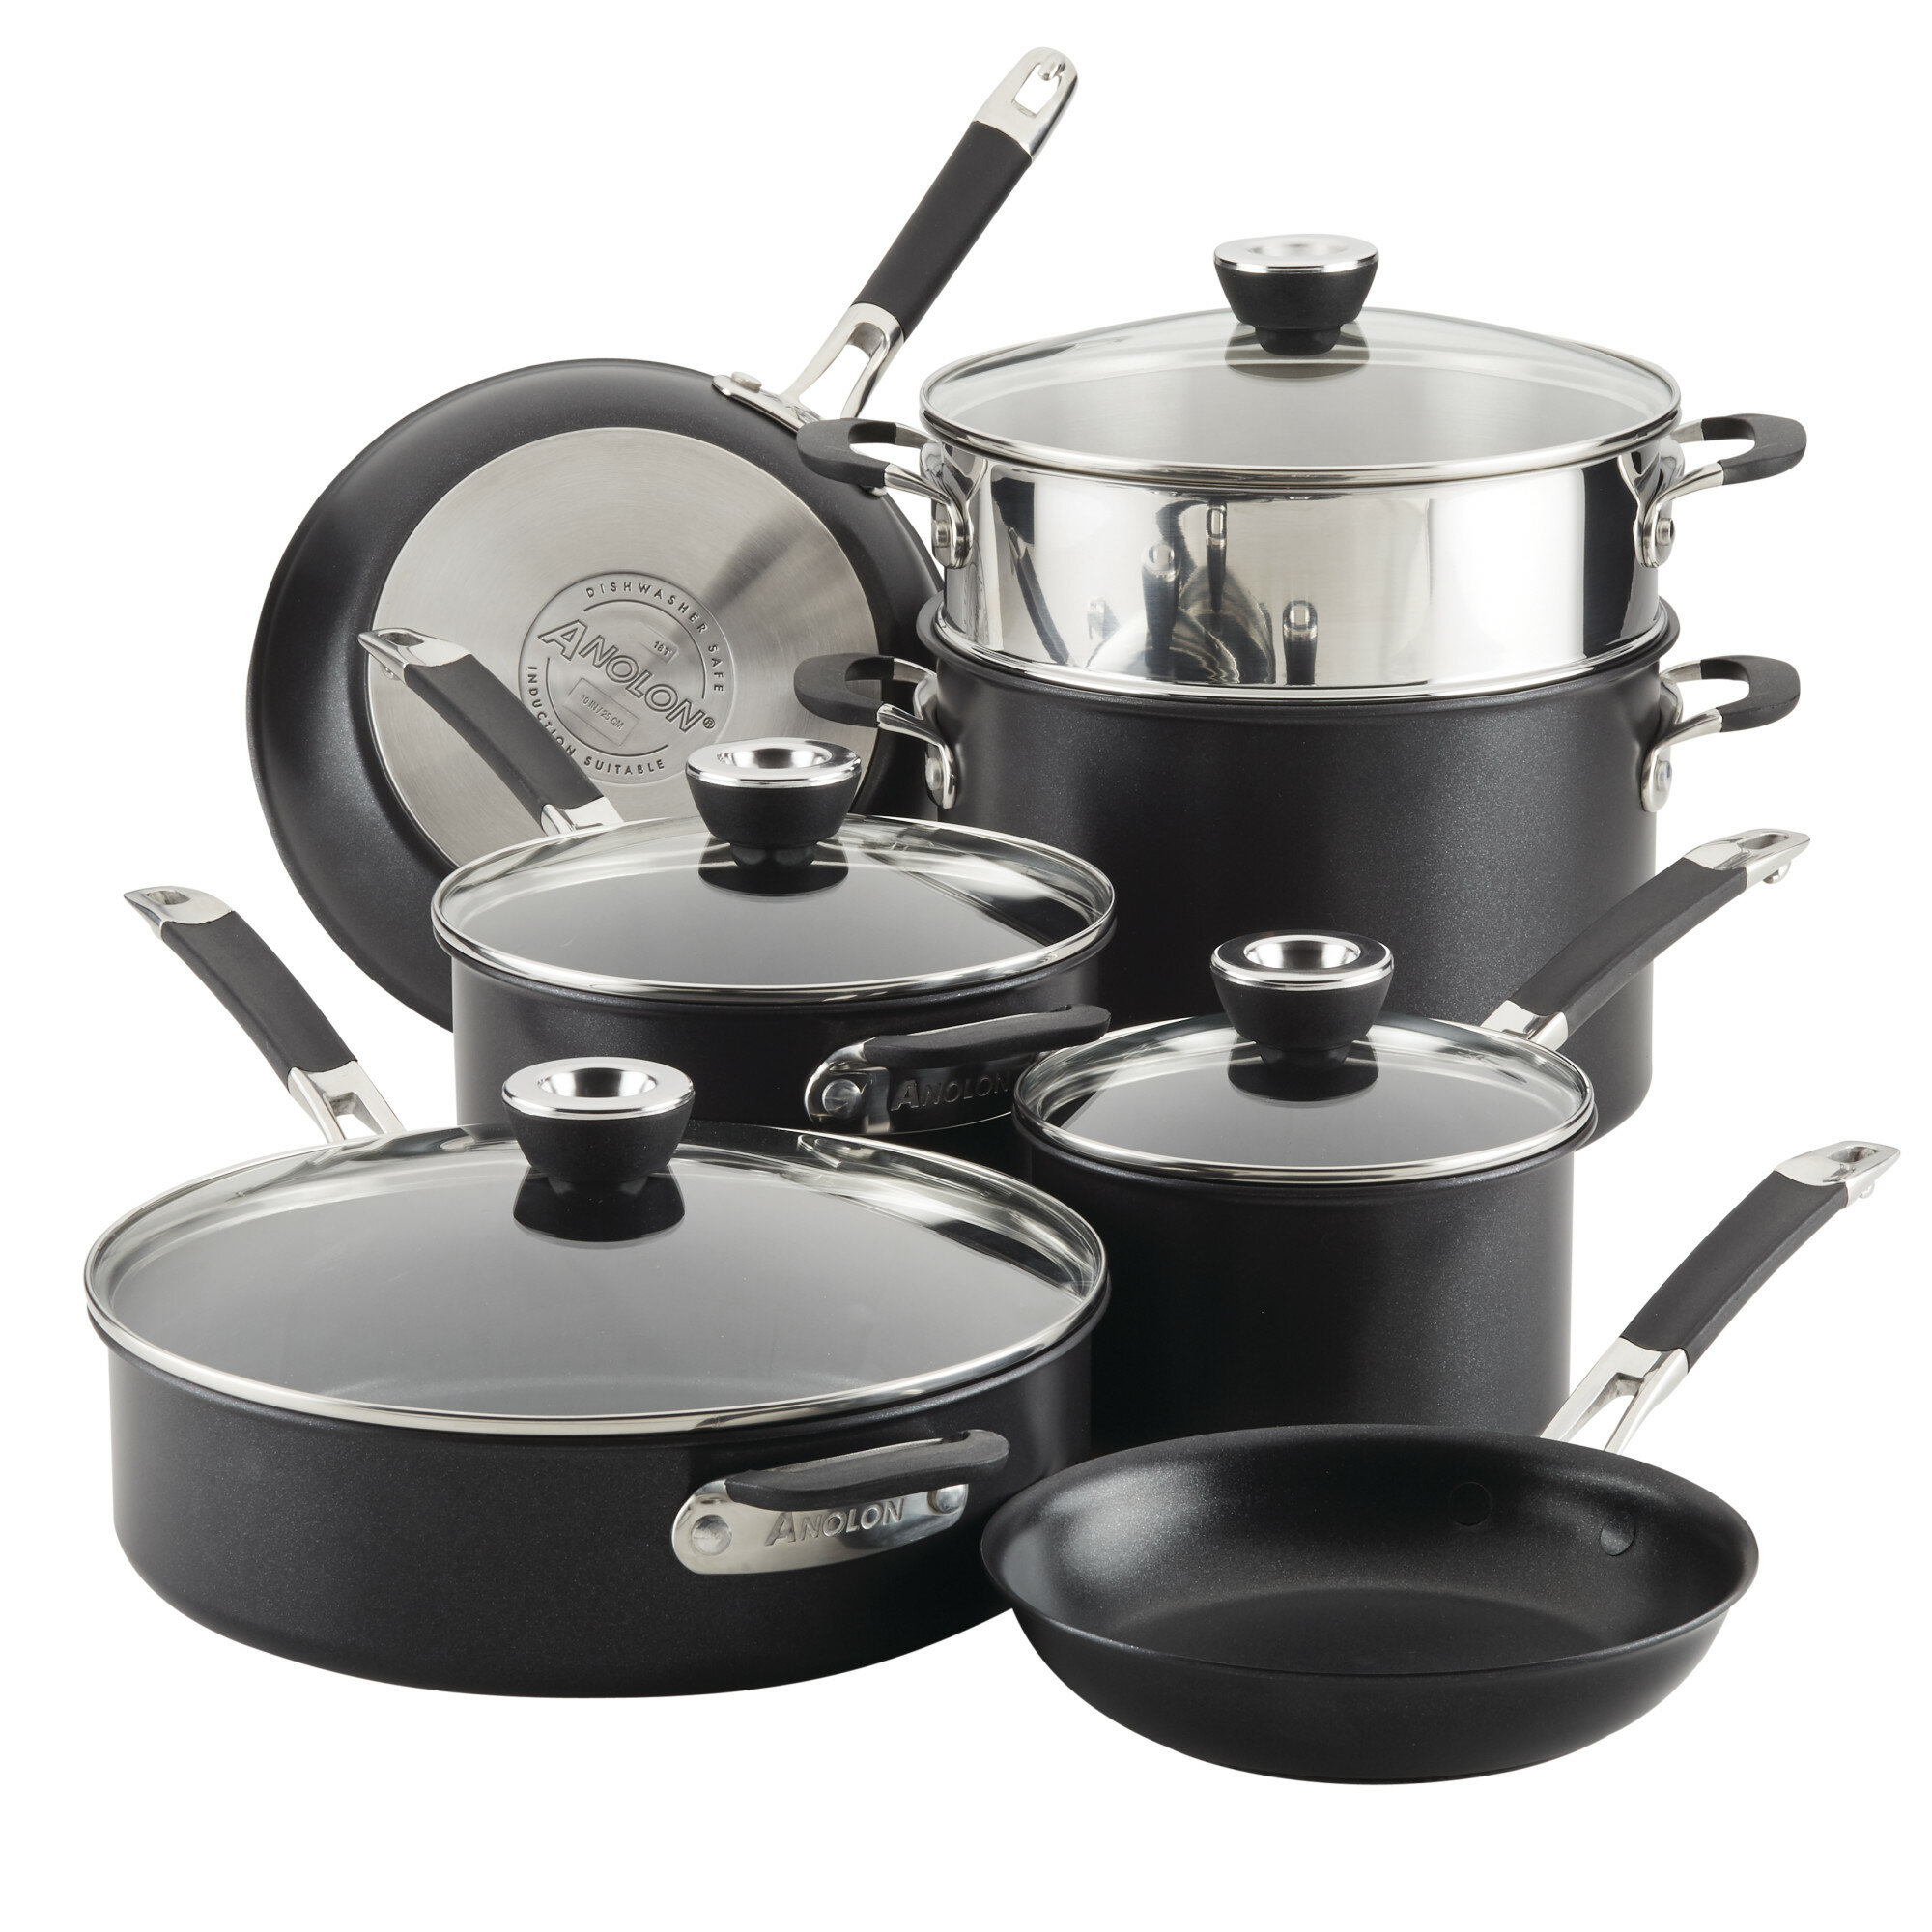 Anolon Advanced Pewter/Grey 11 Piece Cookware Set pots and pans 